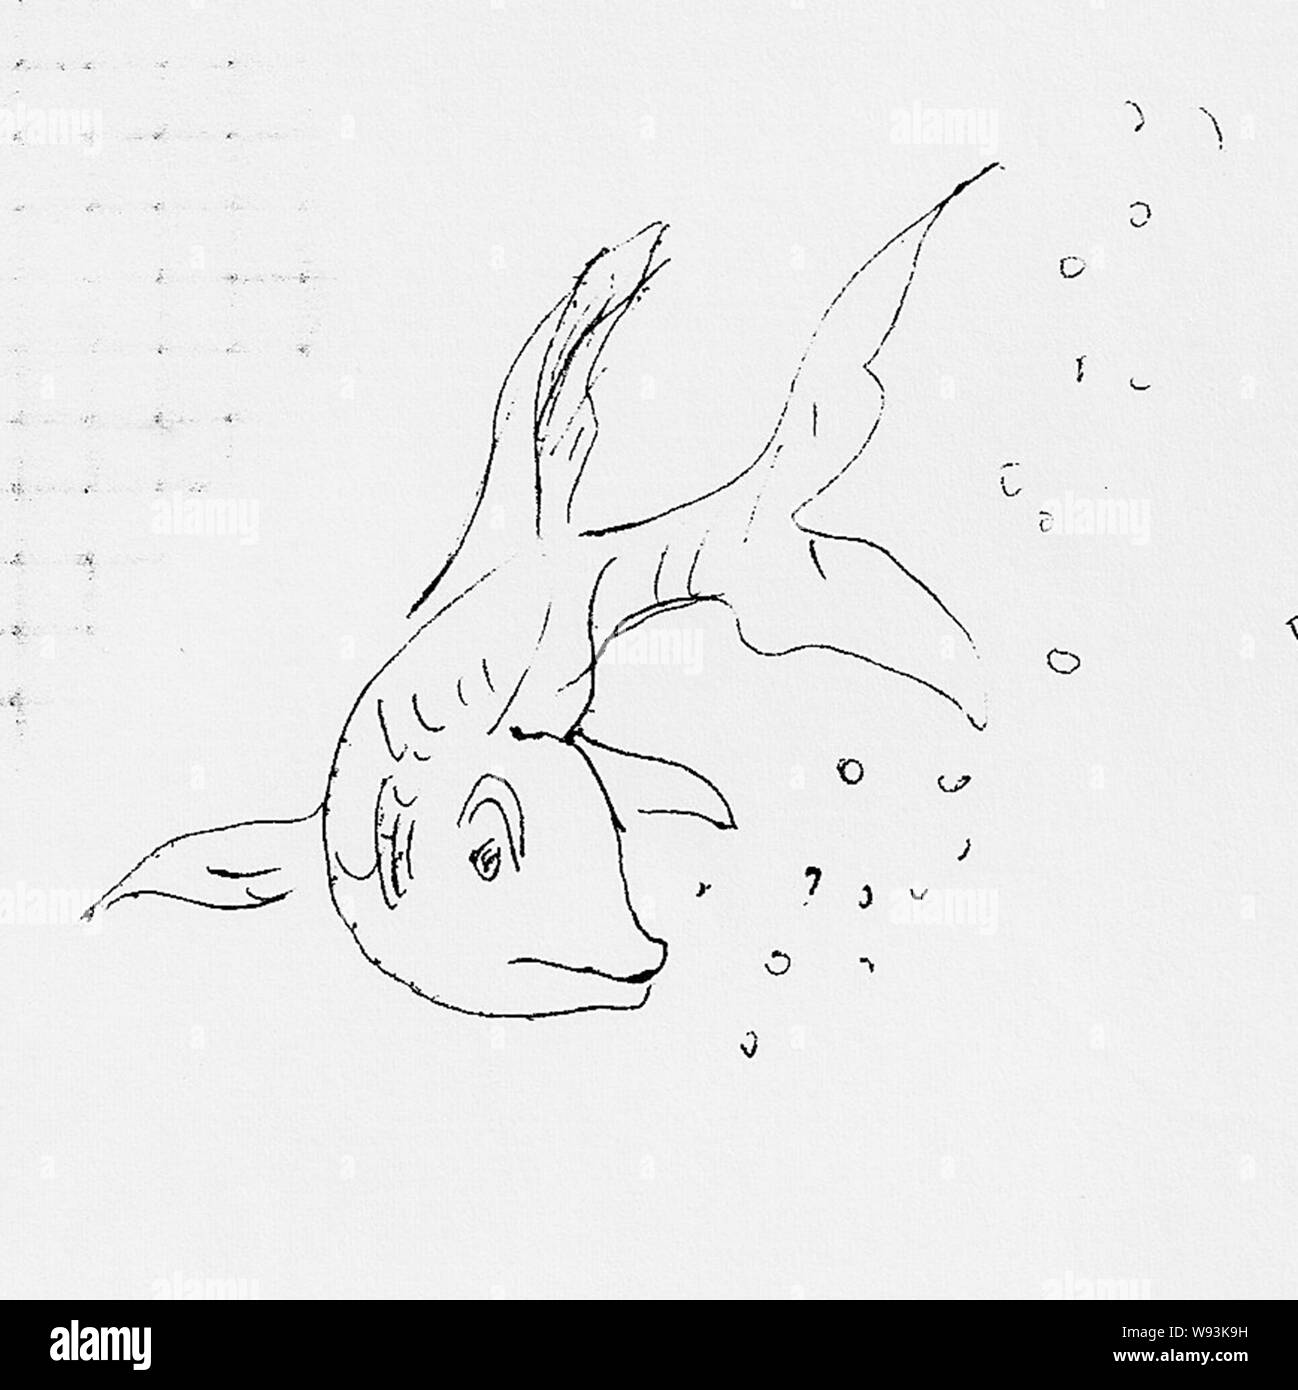 black pen drawing representing a fish Stock Photo